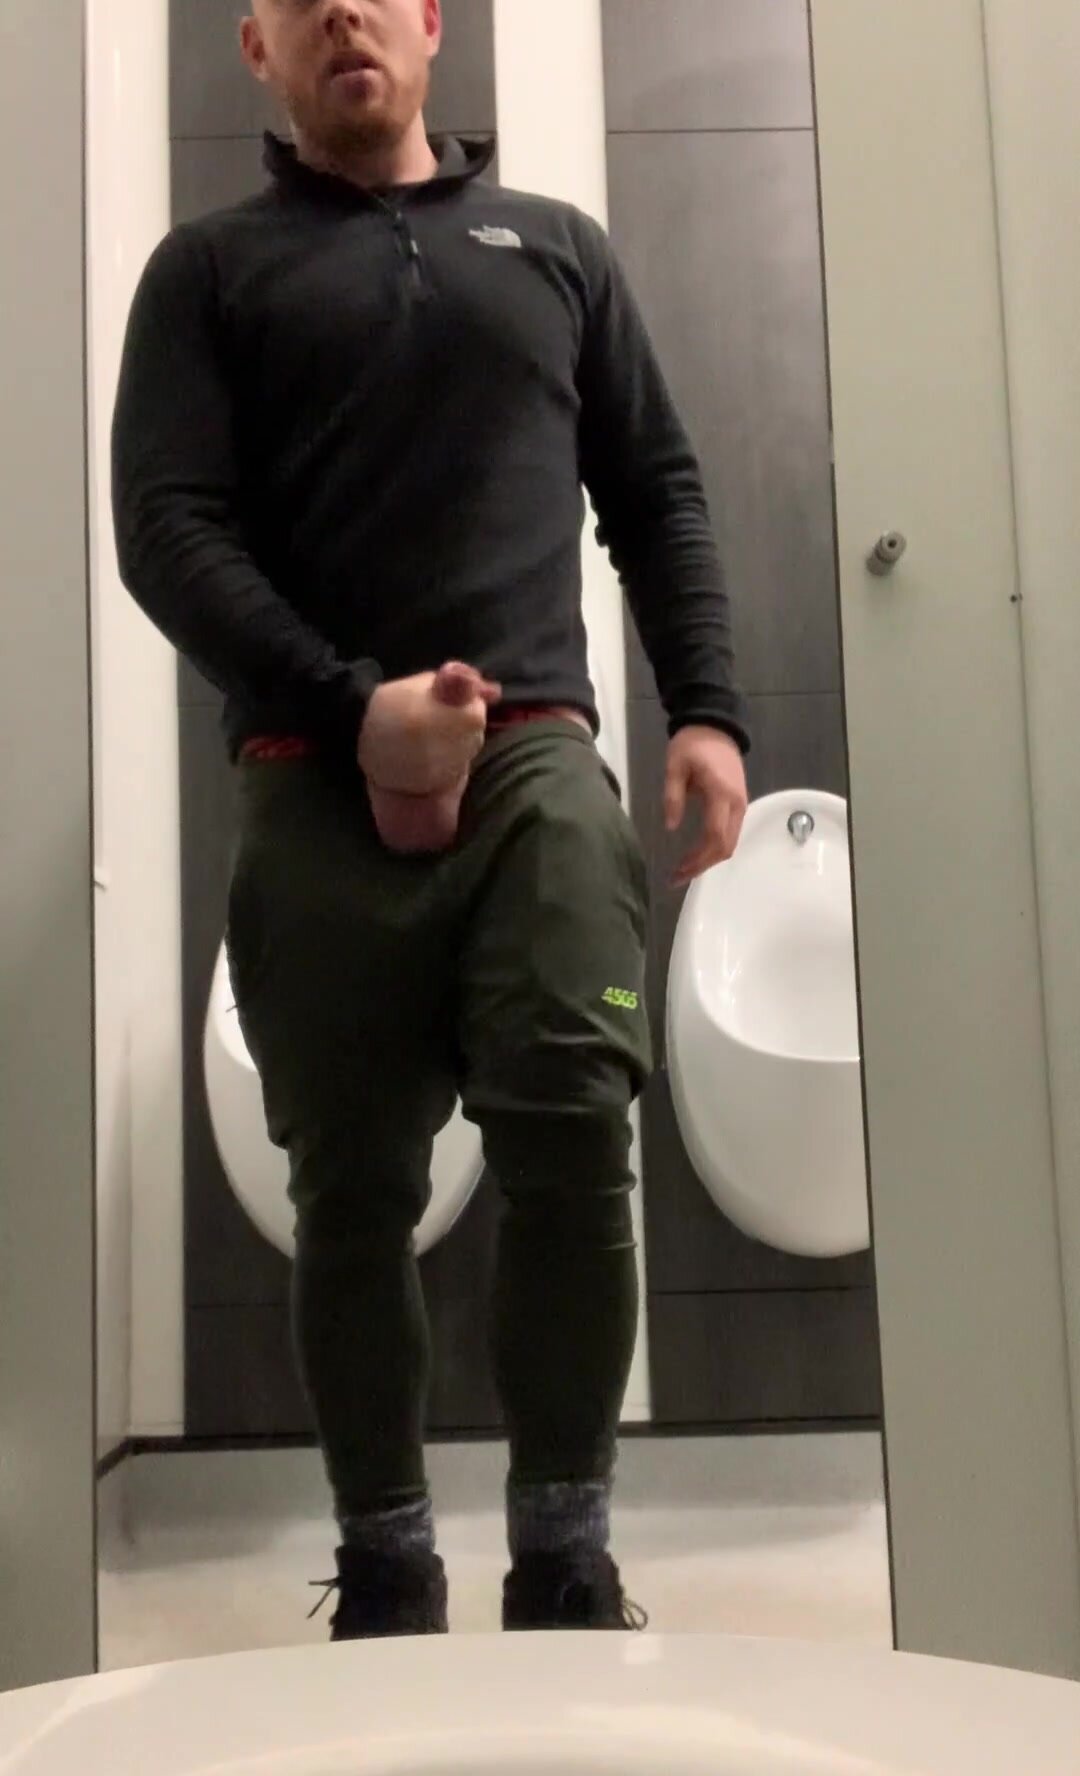 Jerk off in public restroom